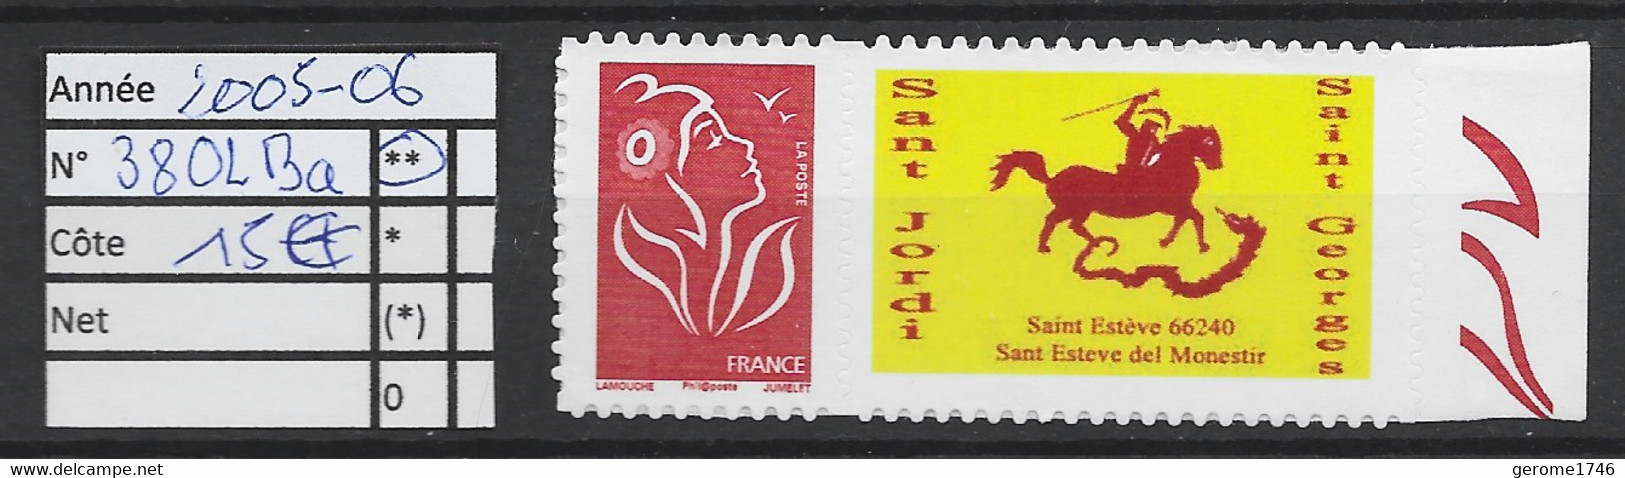 ANNEE 2005-06 . SPLENDIDE LOT TIMBRE  DE LUXE AUTOADHESIF, Neuf (**) N° 3802BA  Gomme D’origine. Côte 15.00 €. - Unused Stamps